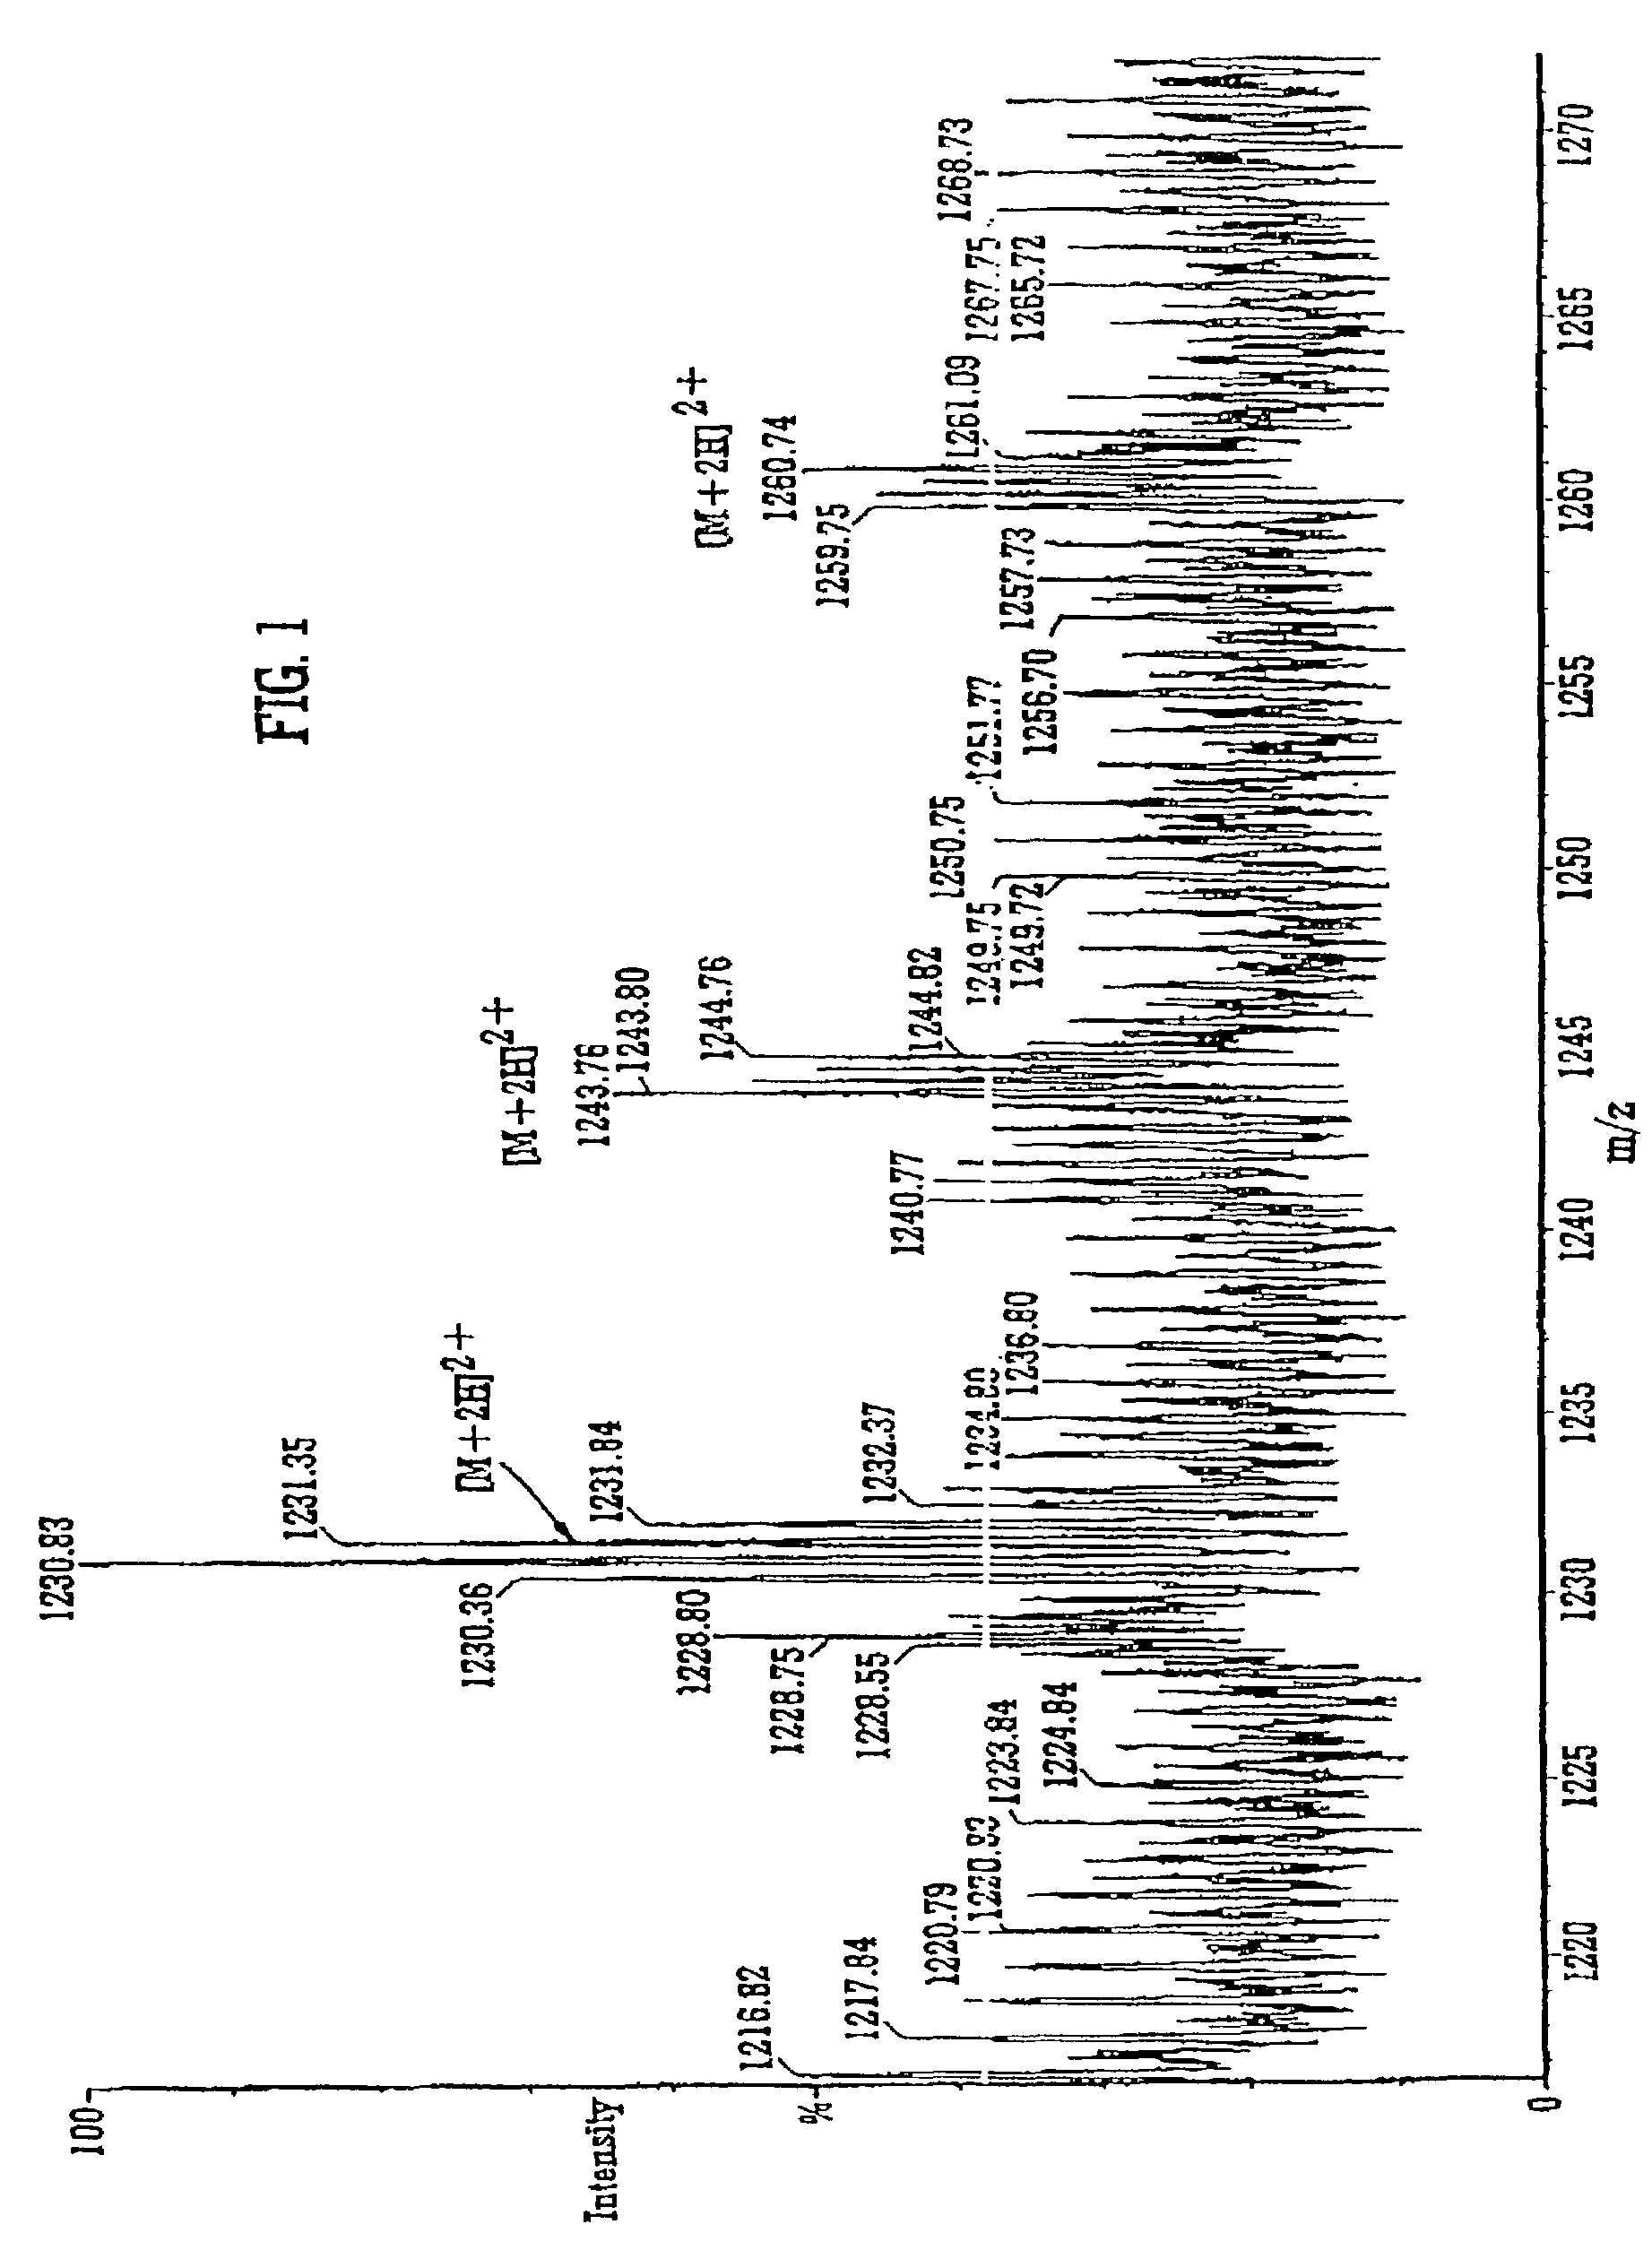 Mass spectrometer and method of mass spectrometry